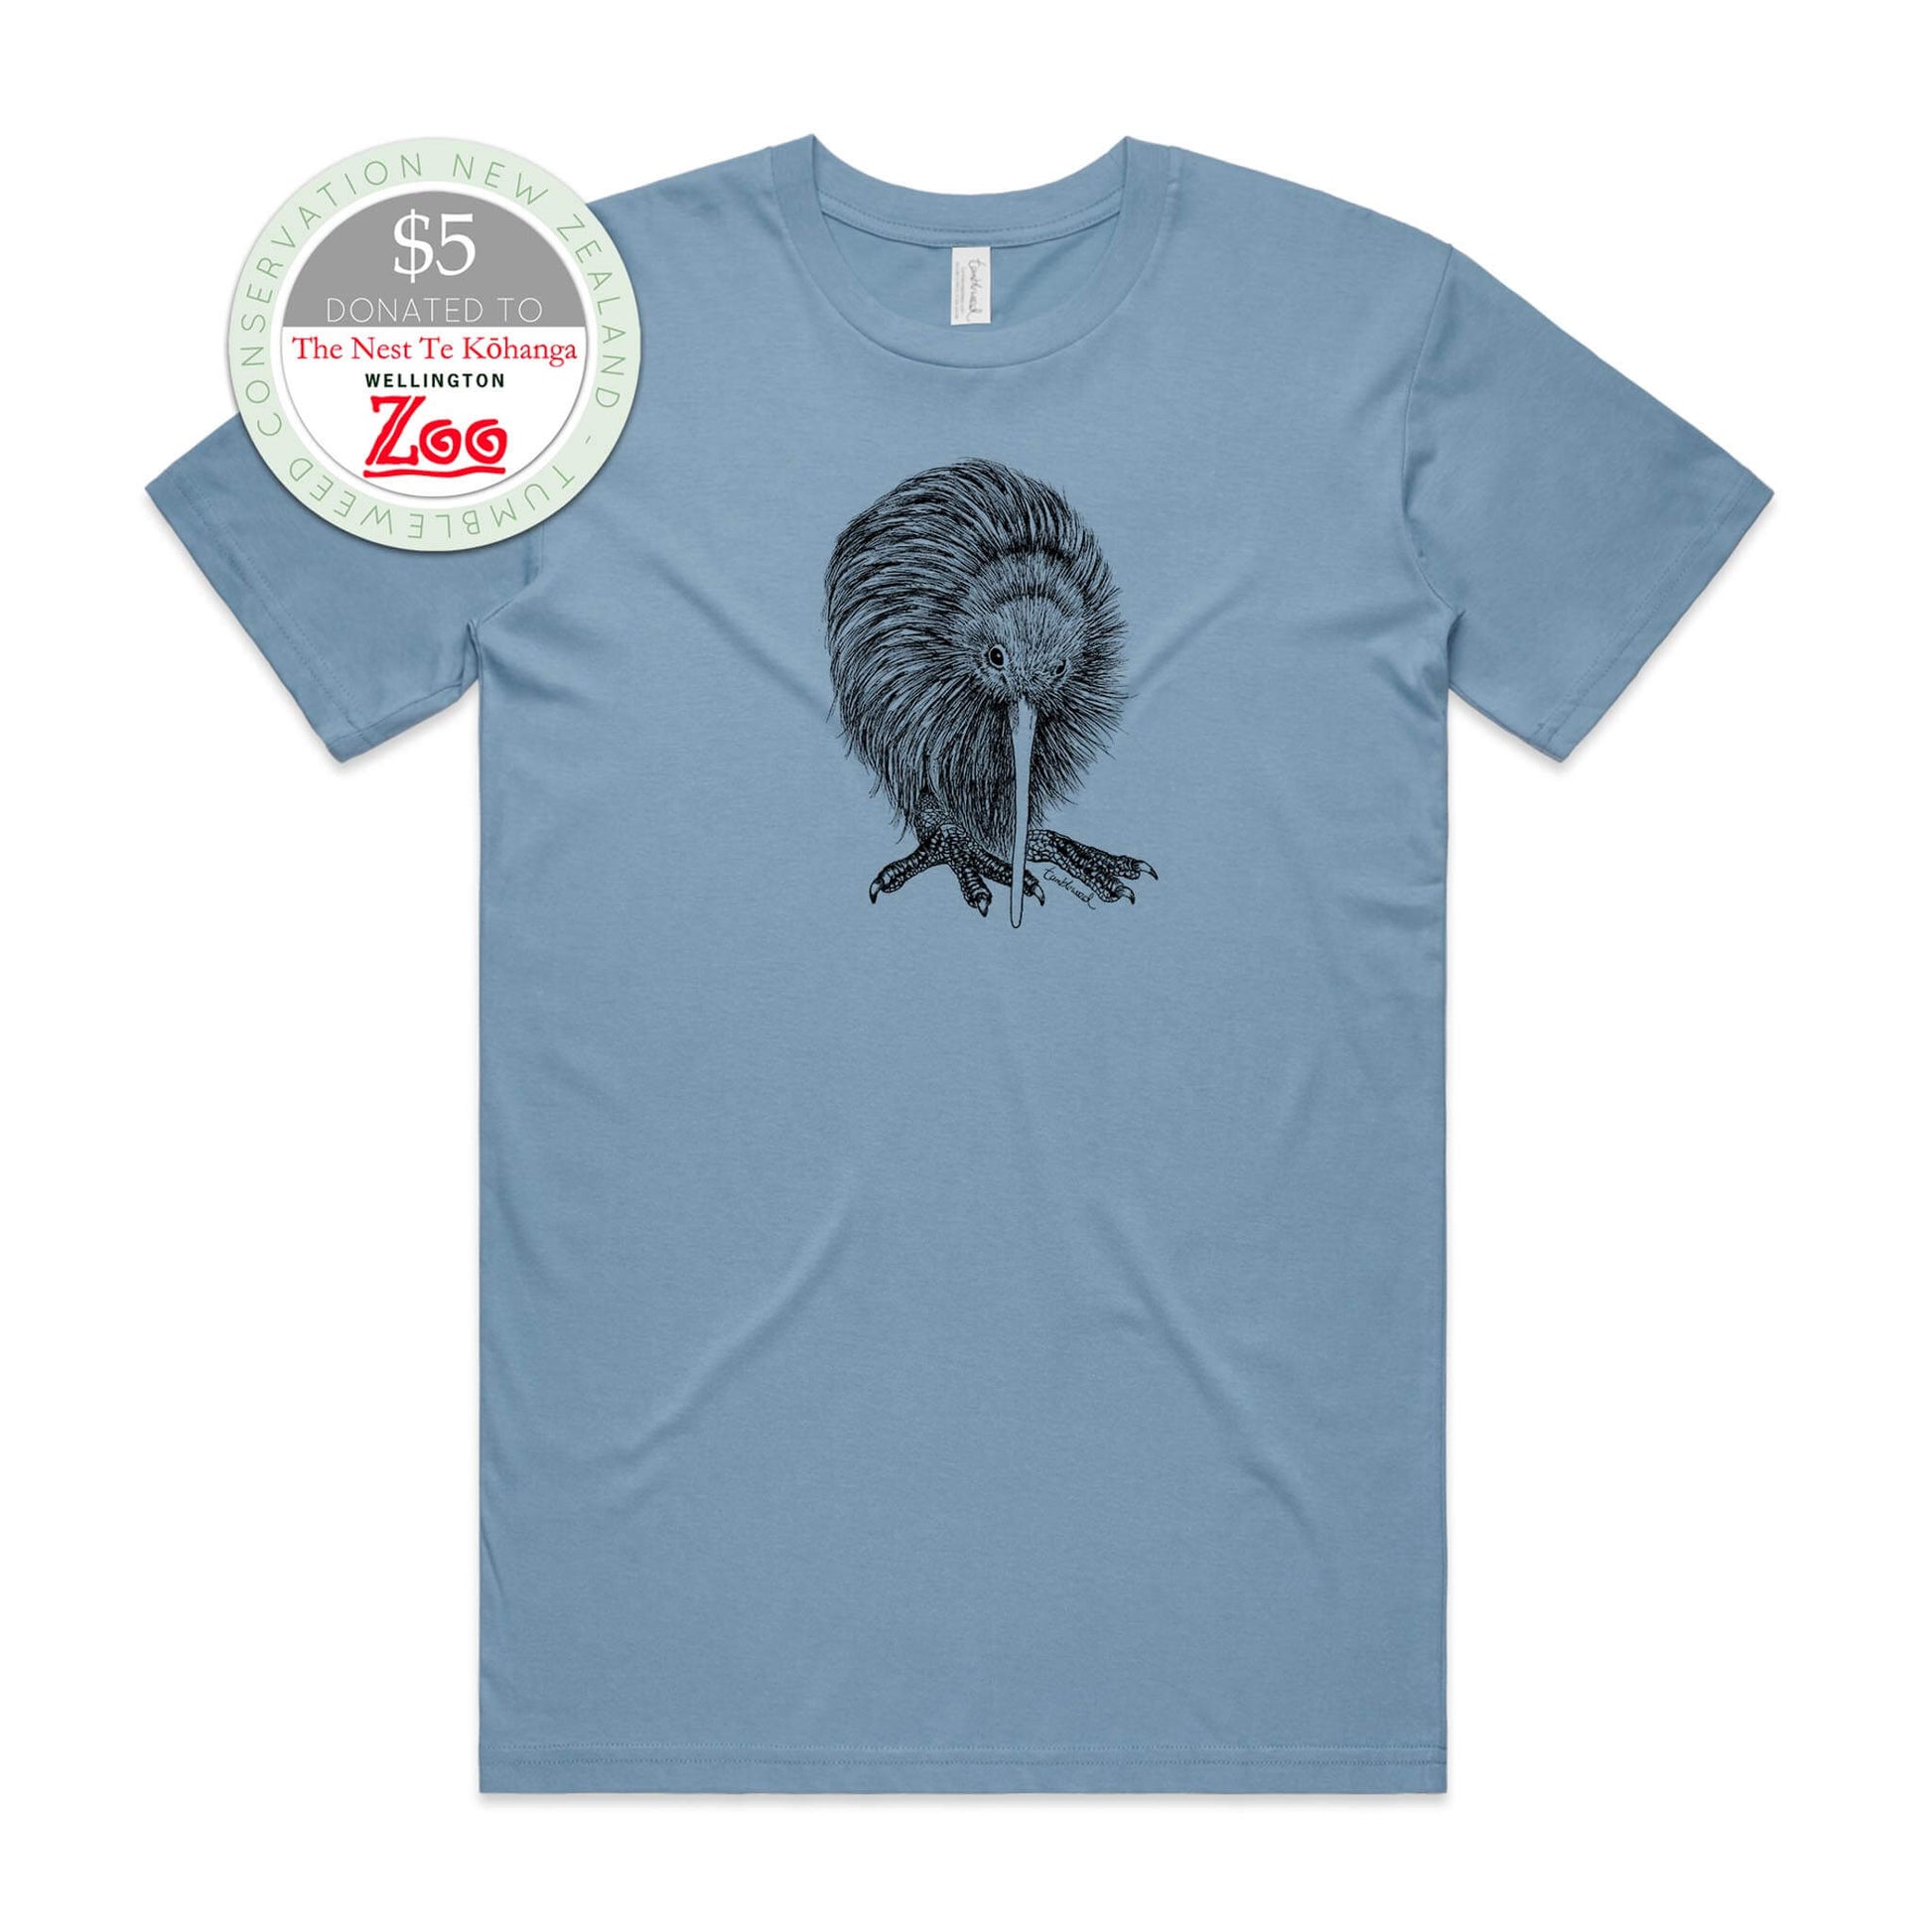 Sage, female t-shirt featuring a screen printed kiwi design.